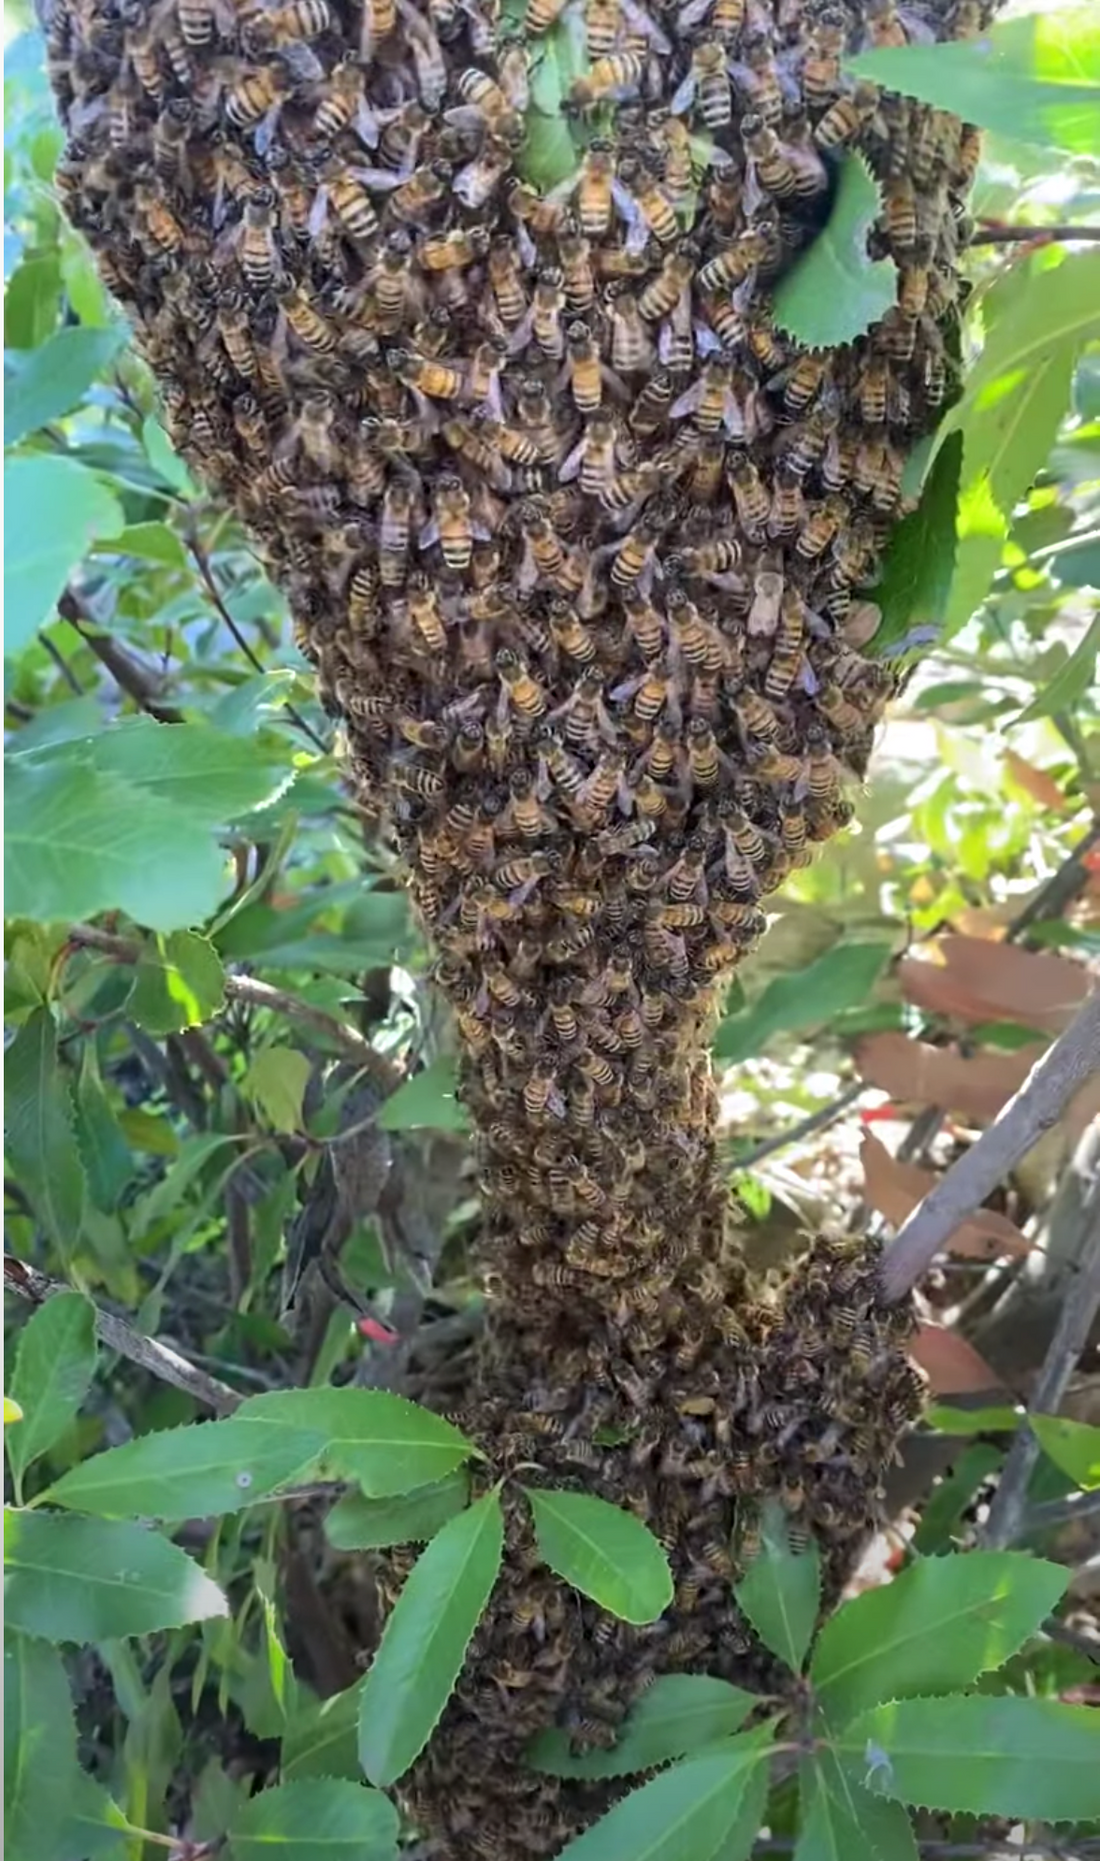 Super bee swarm in a bush in Santa Barbara rescued by Santa Barbara Hives!